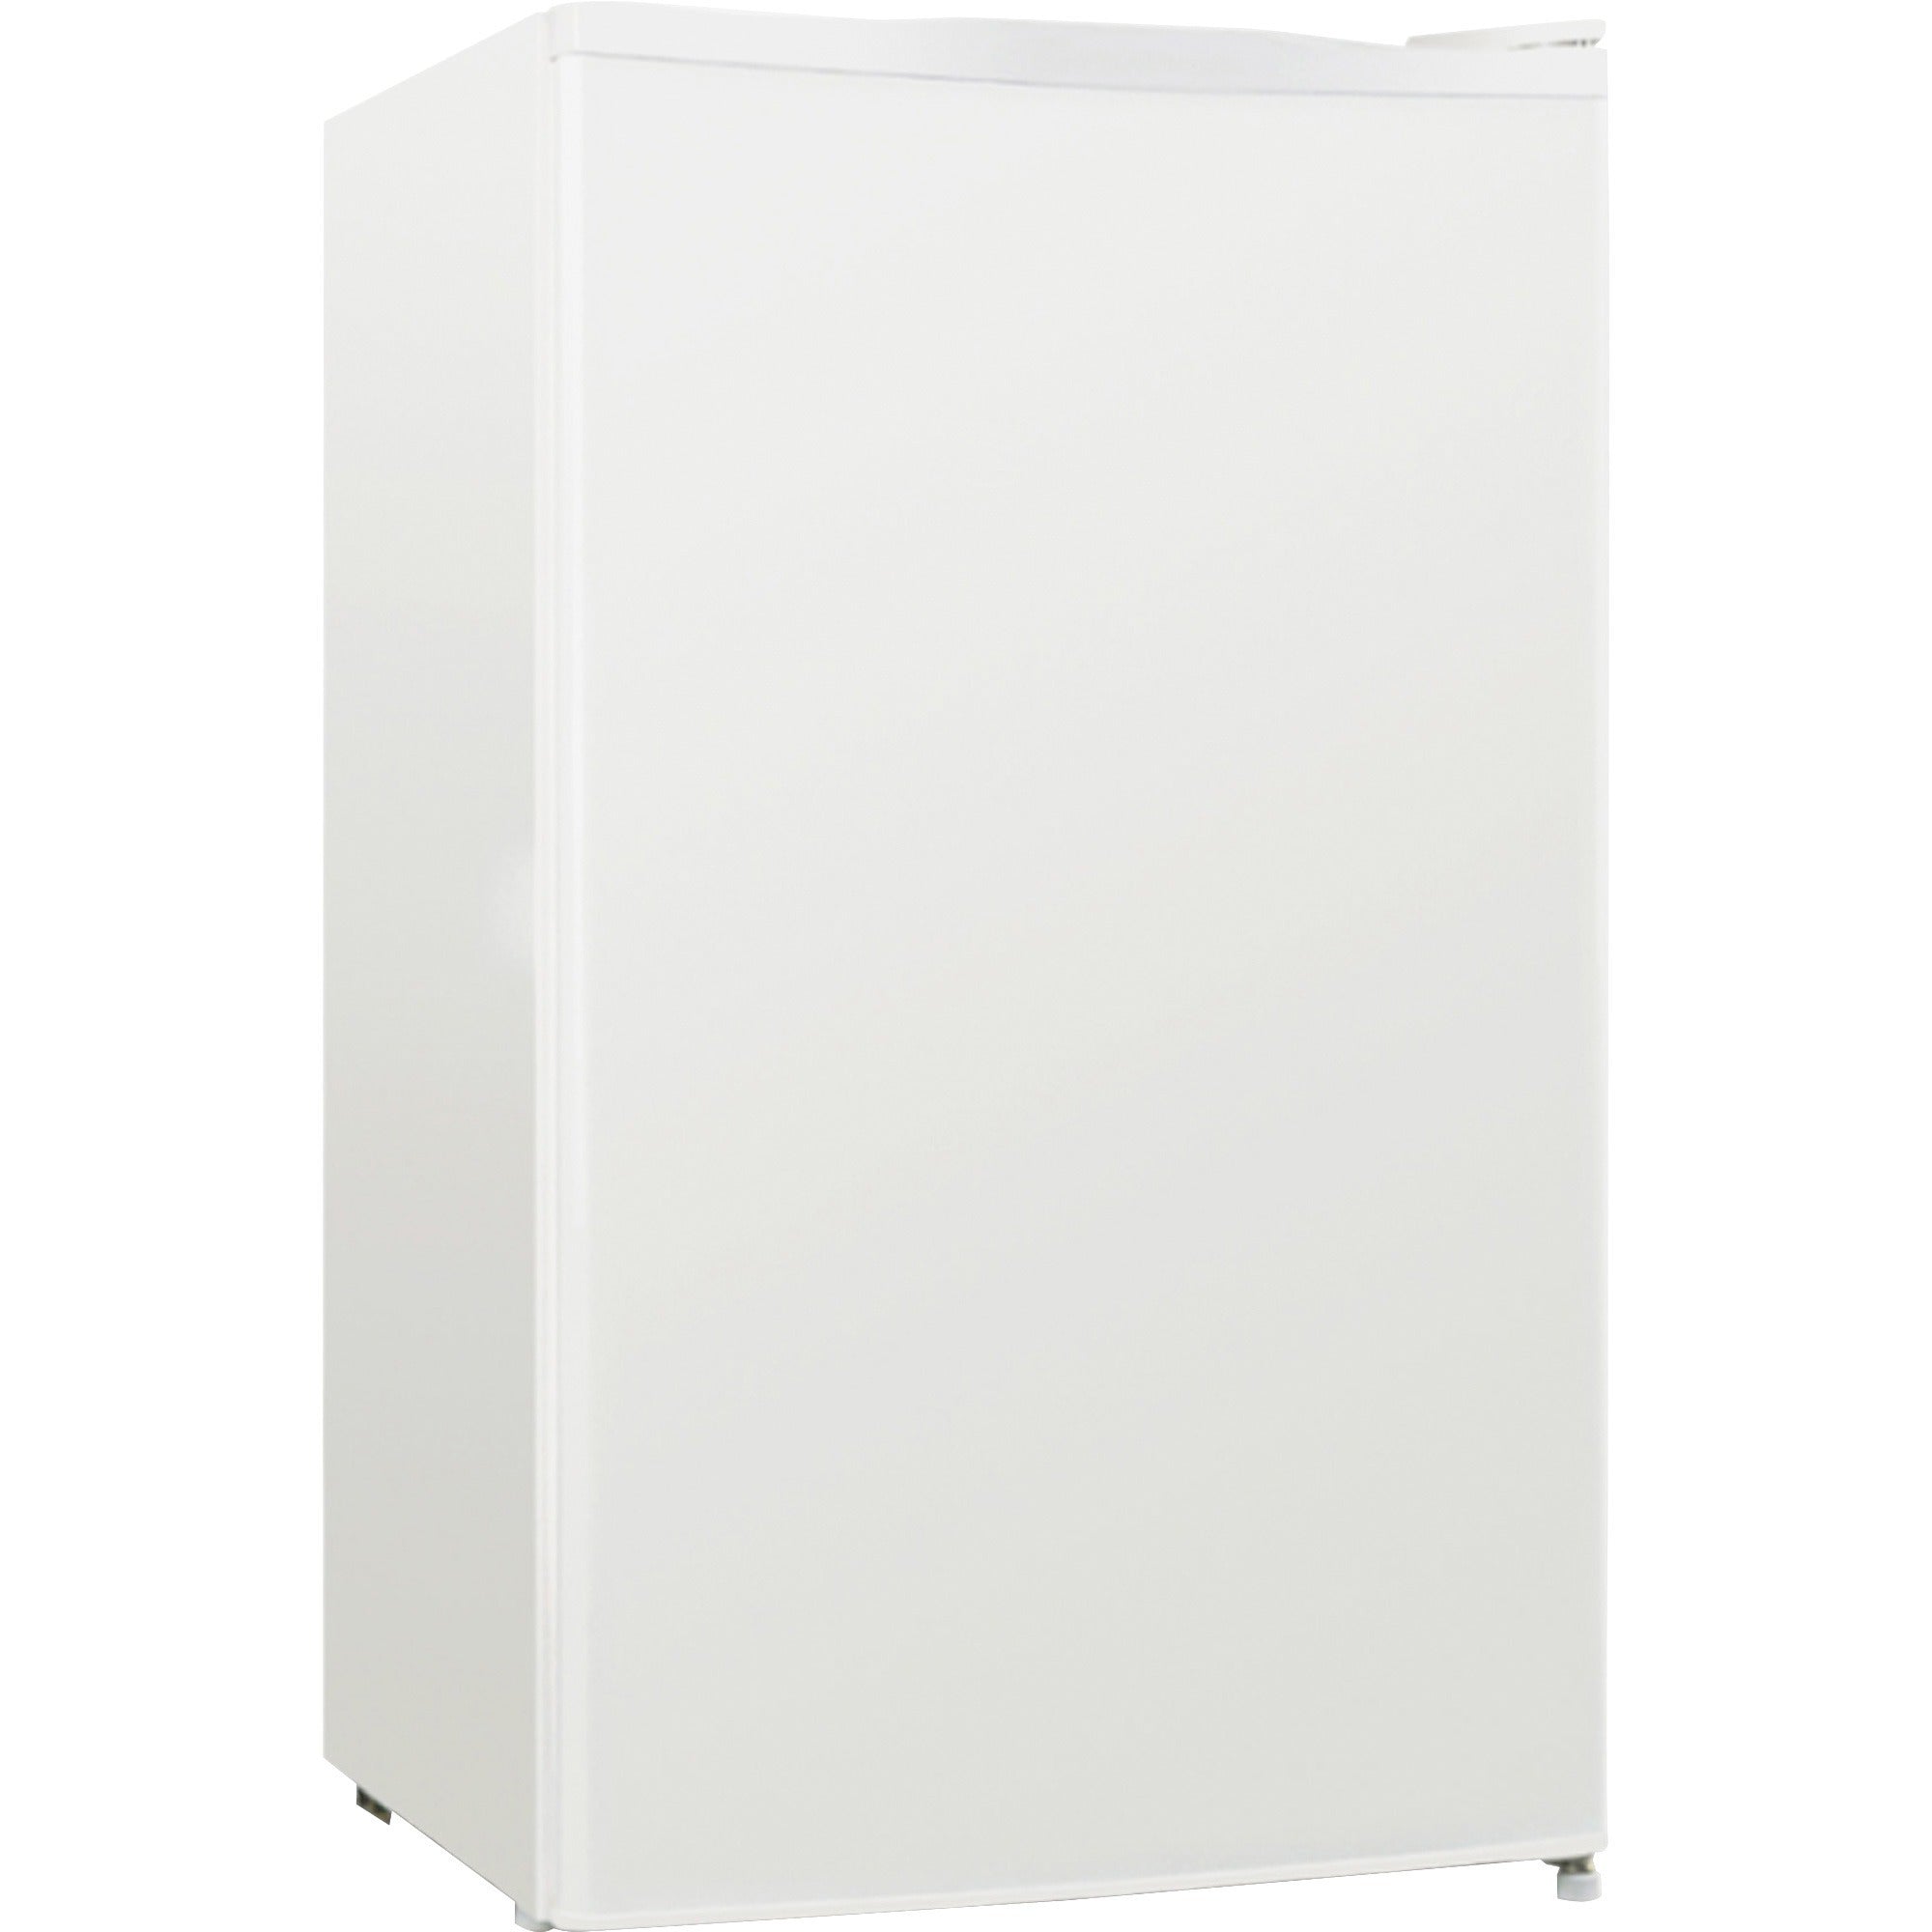 Lorell Compact Refrigerator - 3.20 ft - Manual Defrost - Manual Defrost - Reversible - 3.20 ft Net Refrigerator Capacity - Black, Light Blue, White - Steel, Fiberglass, Plastic - 